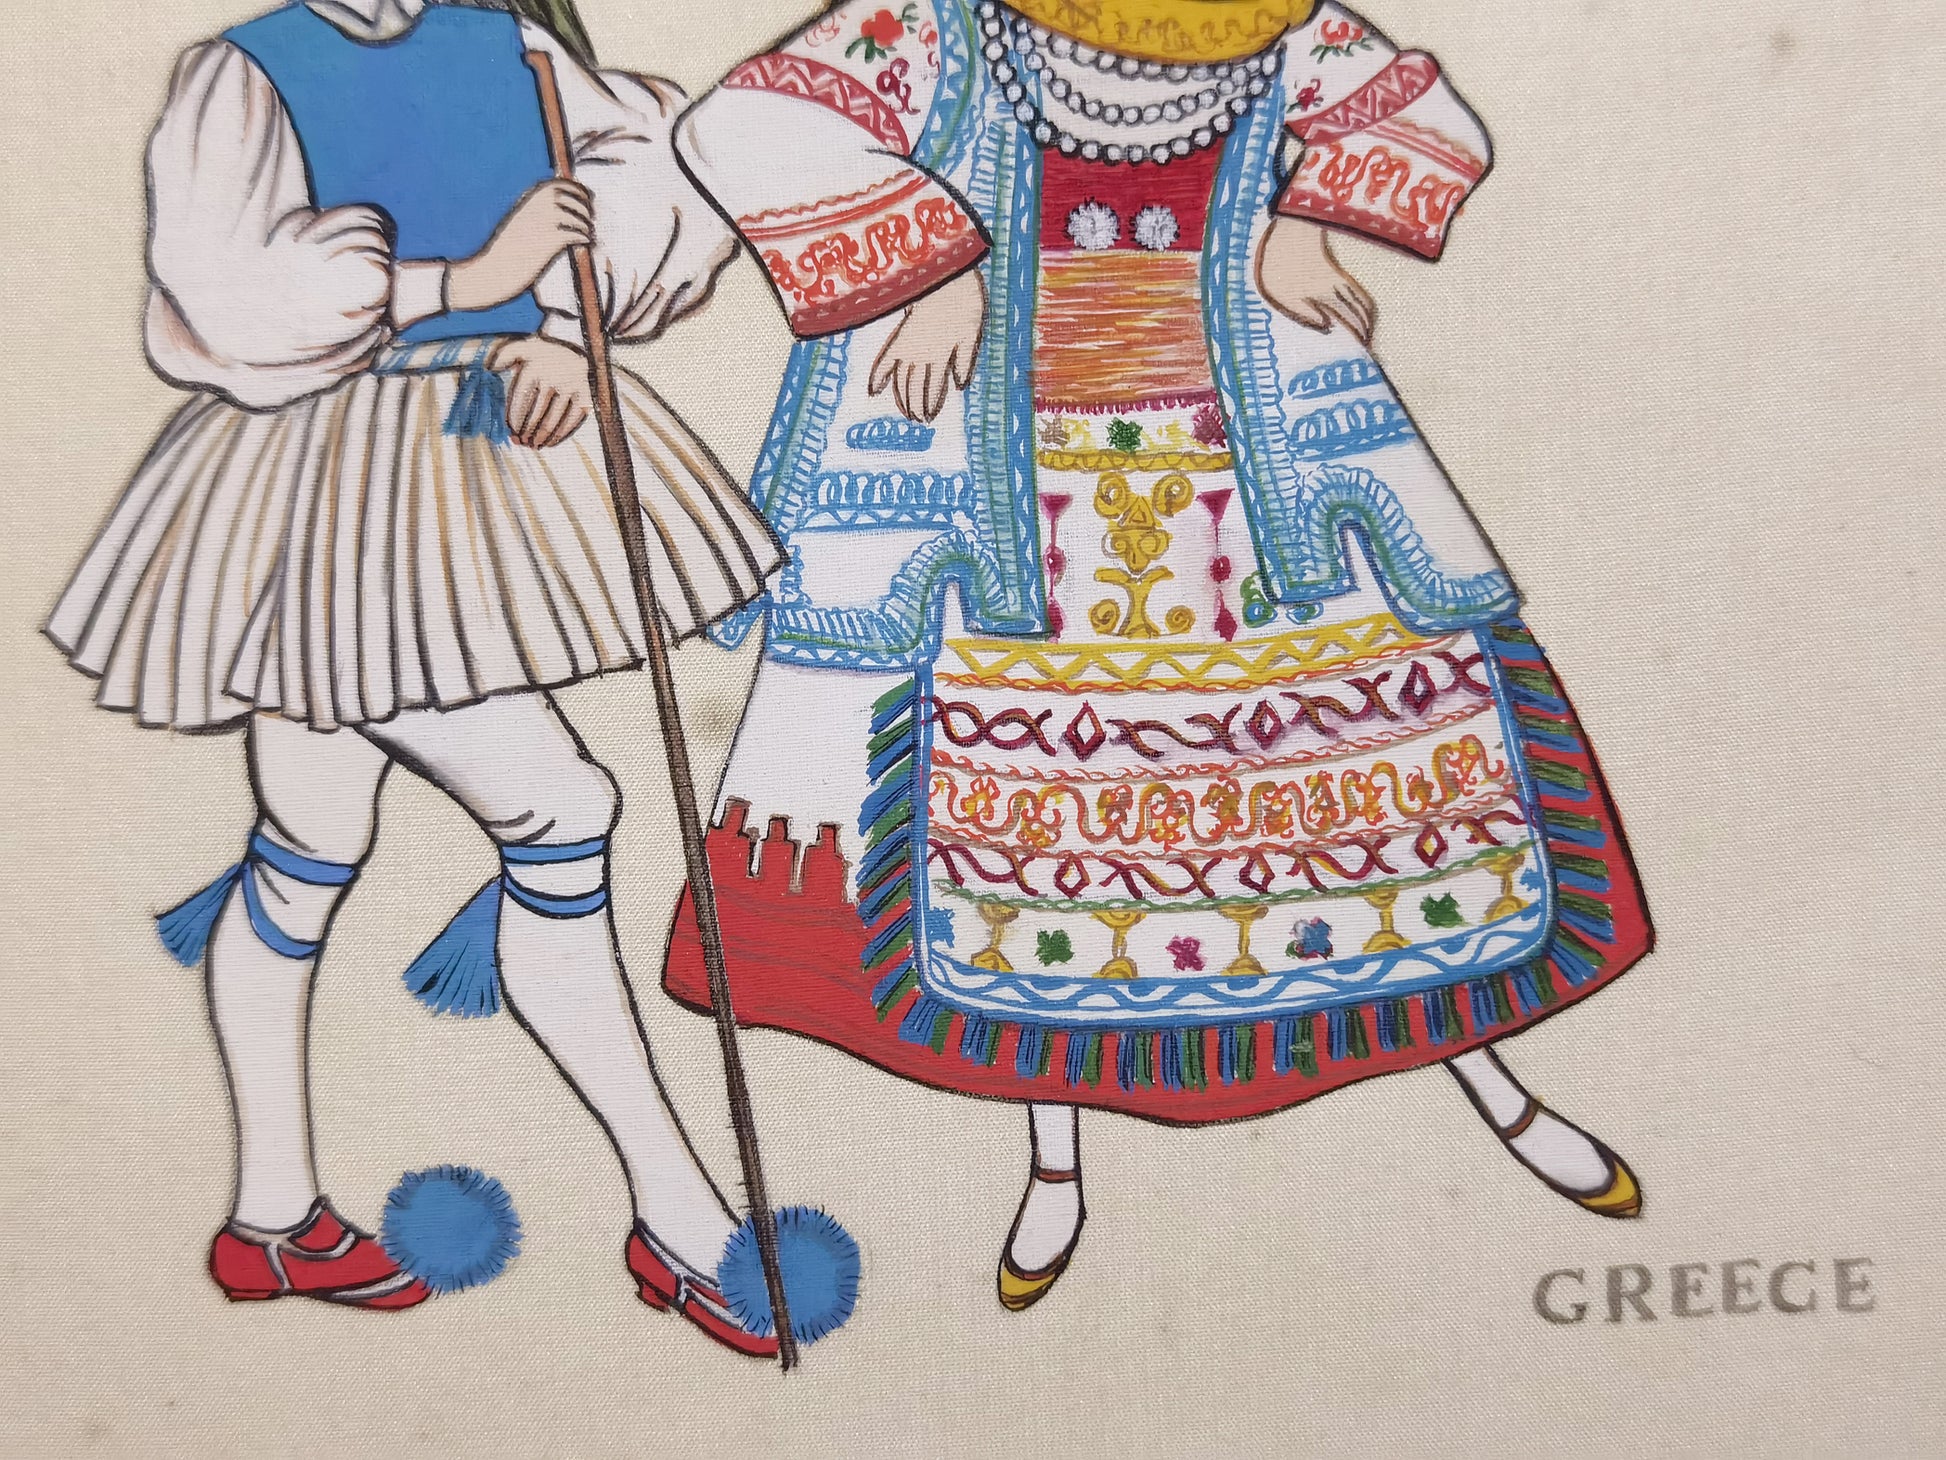 Greece Folk Costume Handmade Art Printing with Wood Frame